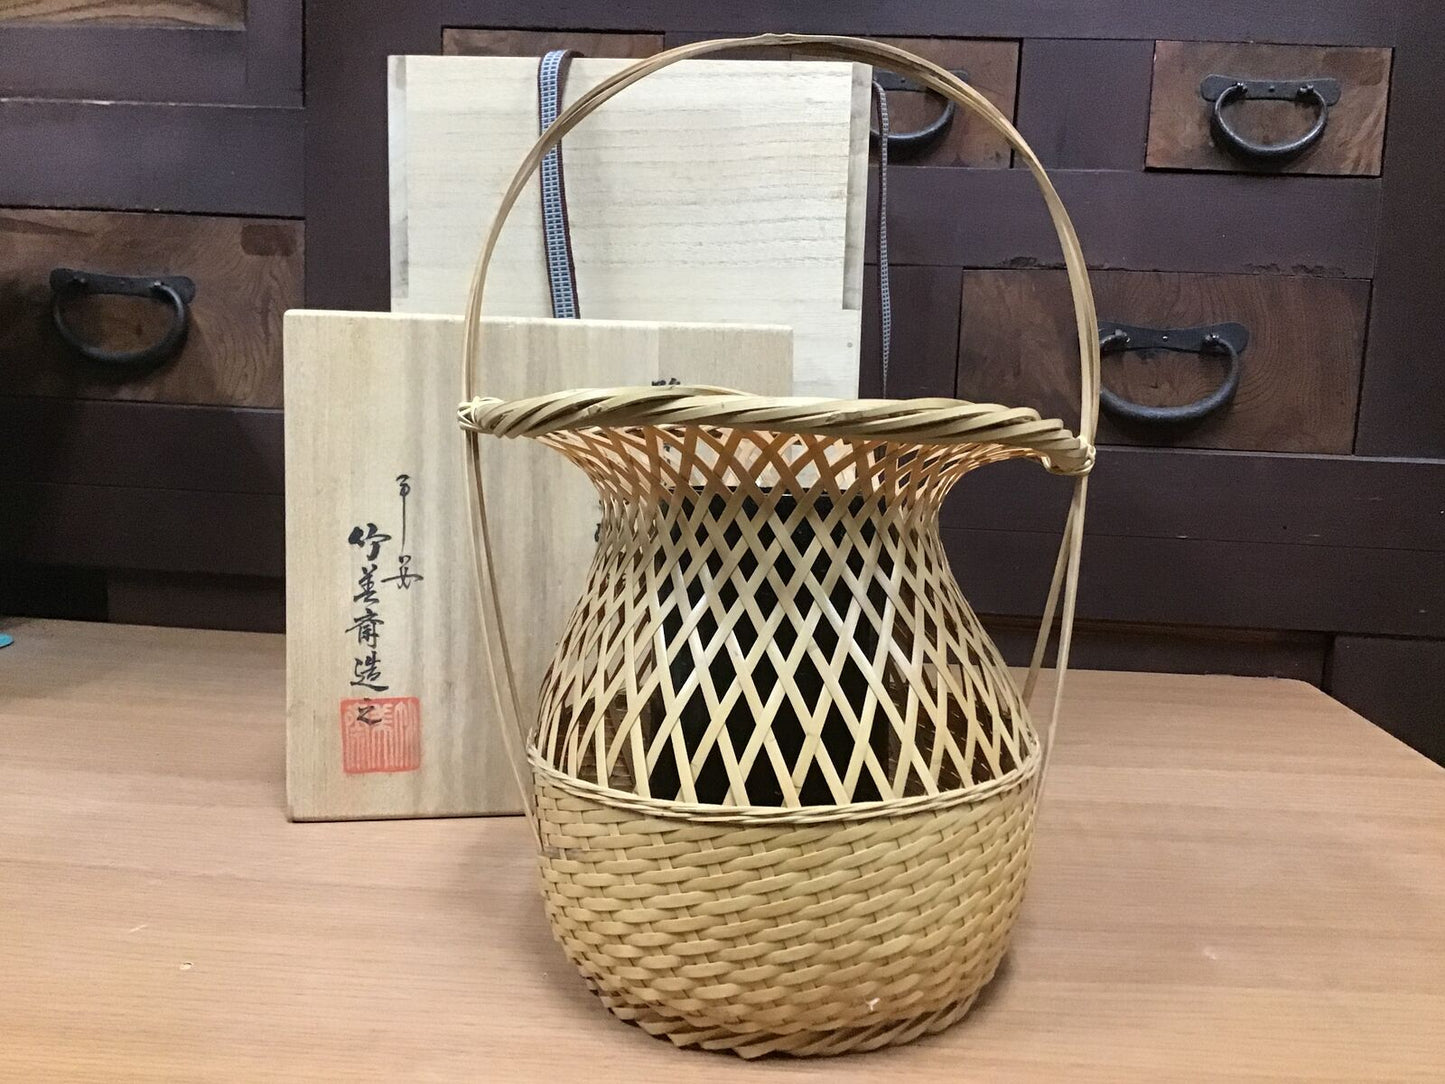 Y0775 FLOWER VASE Bamboo handle basket signed box Japanese antique ikebana kabin